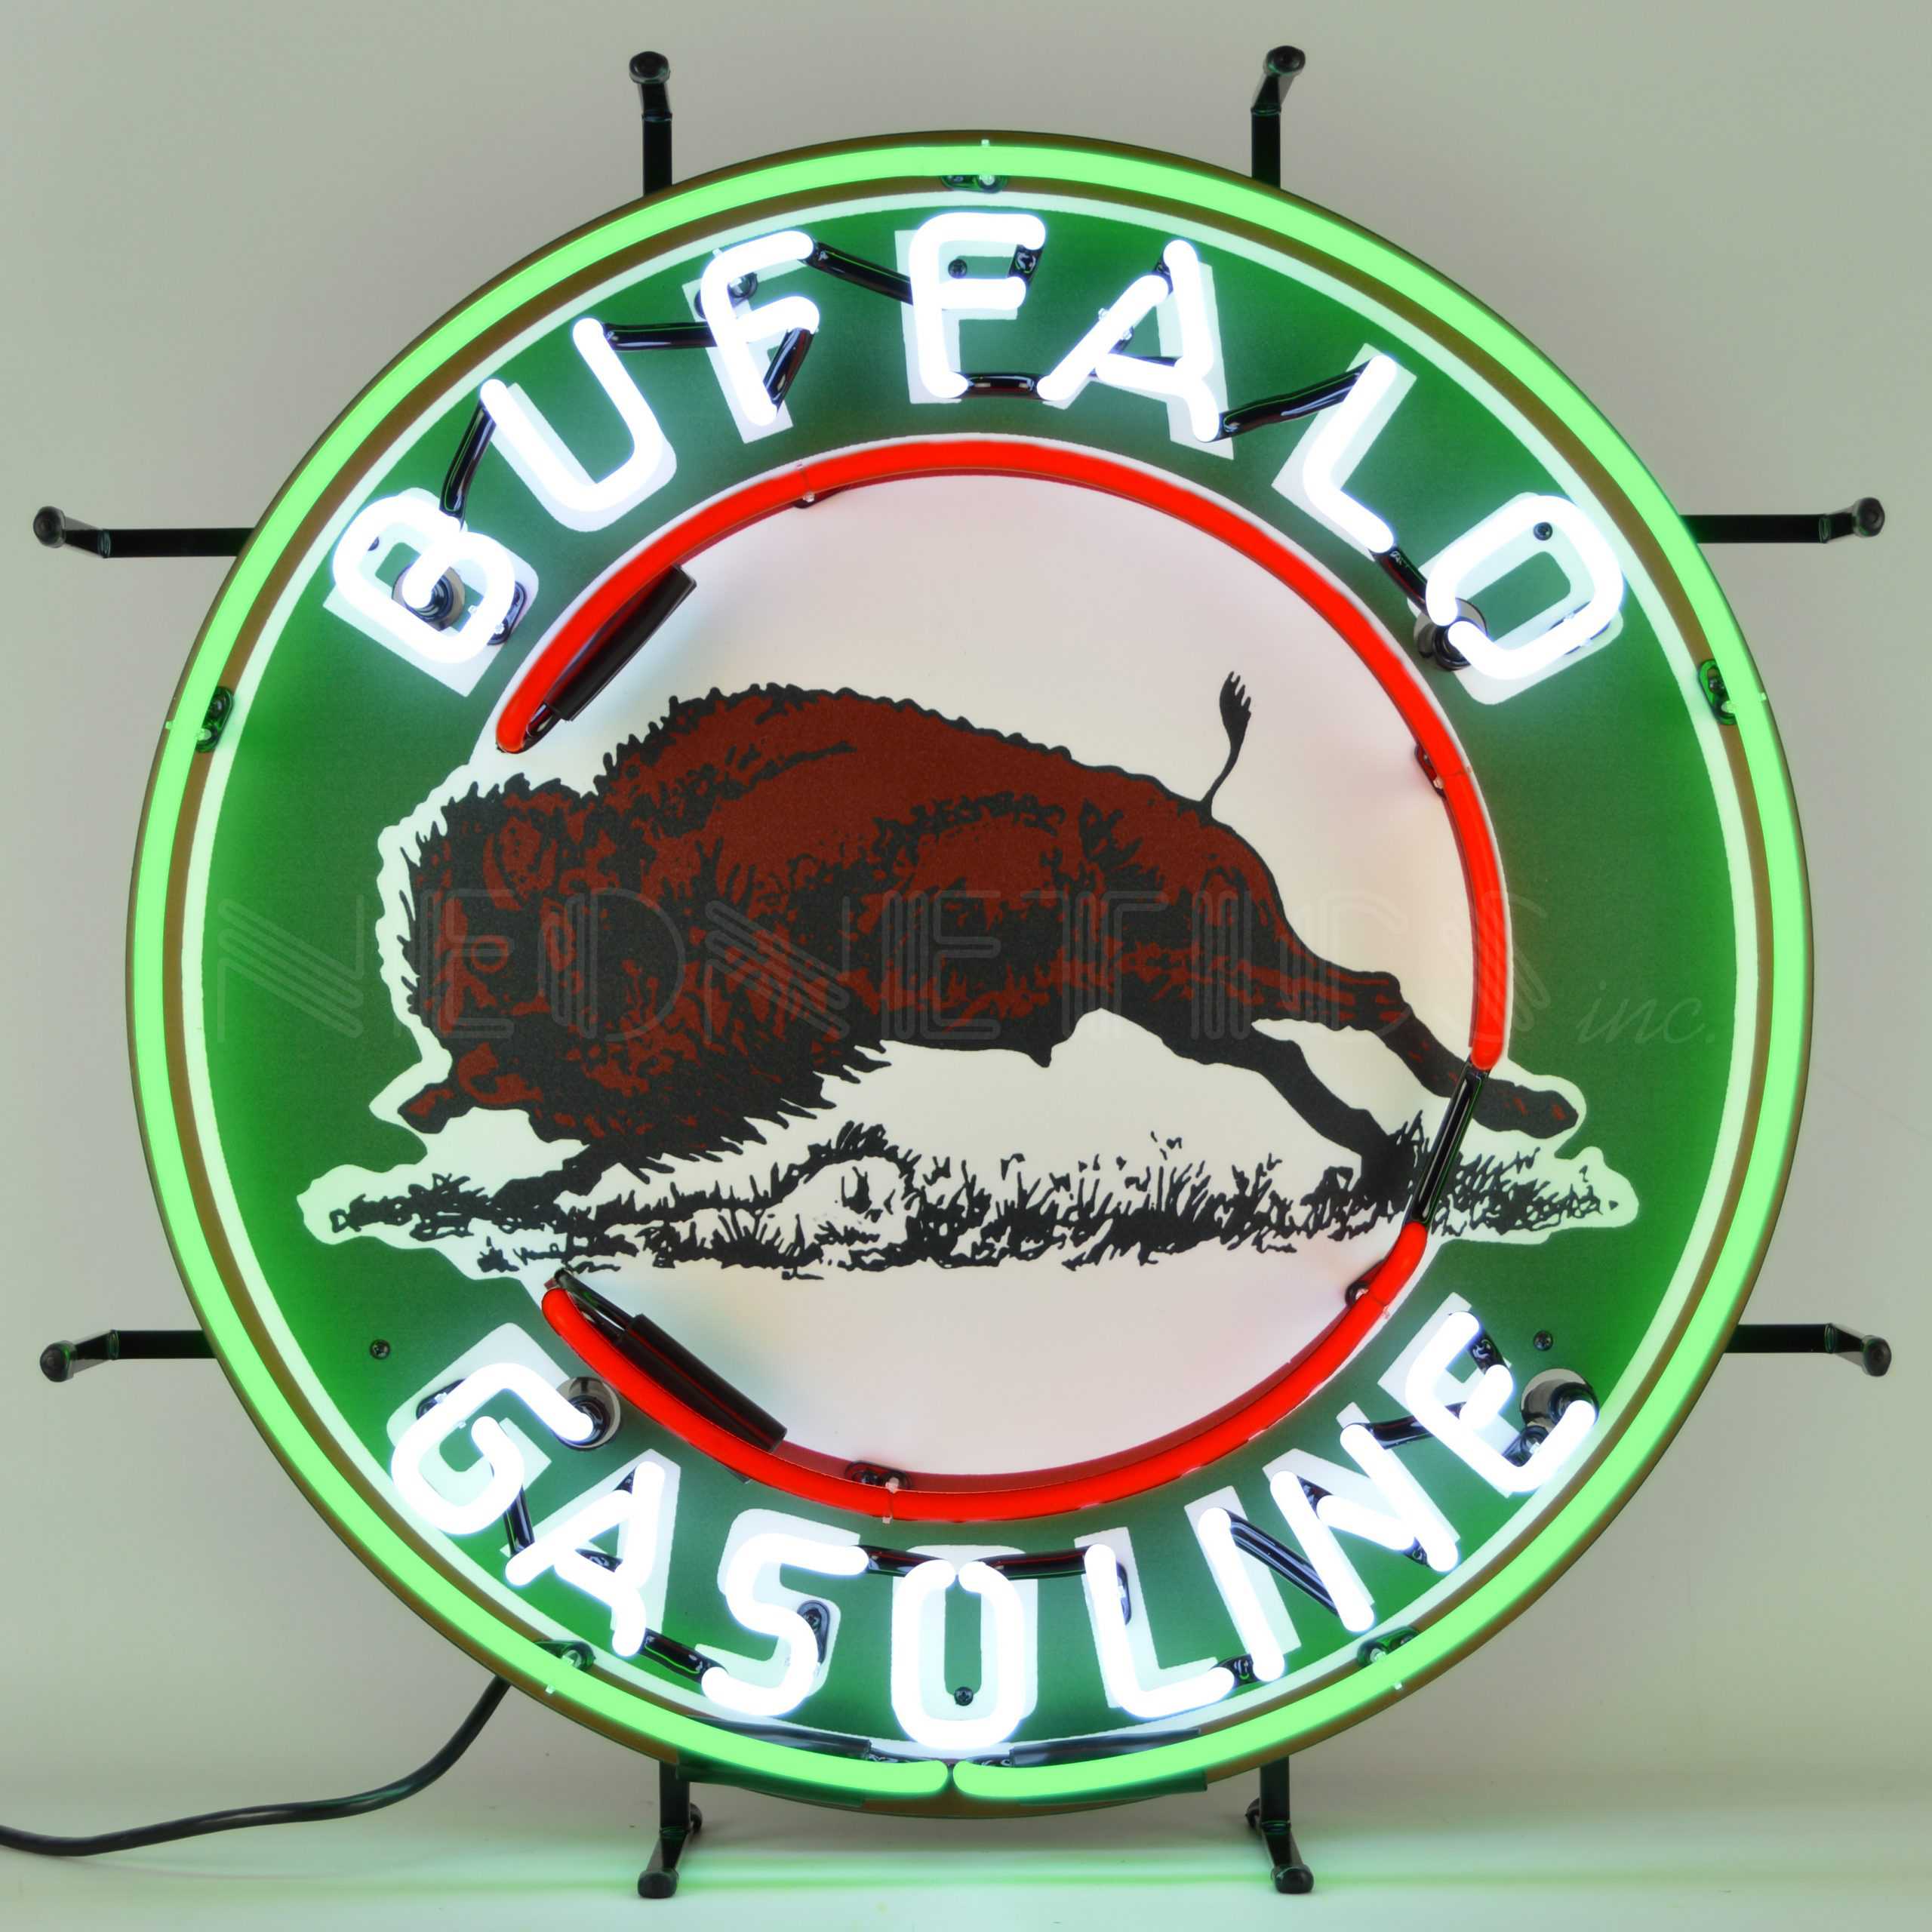 GAS - BUFFALO GASOLINE NEON SIGN